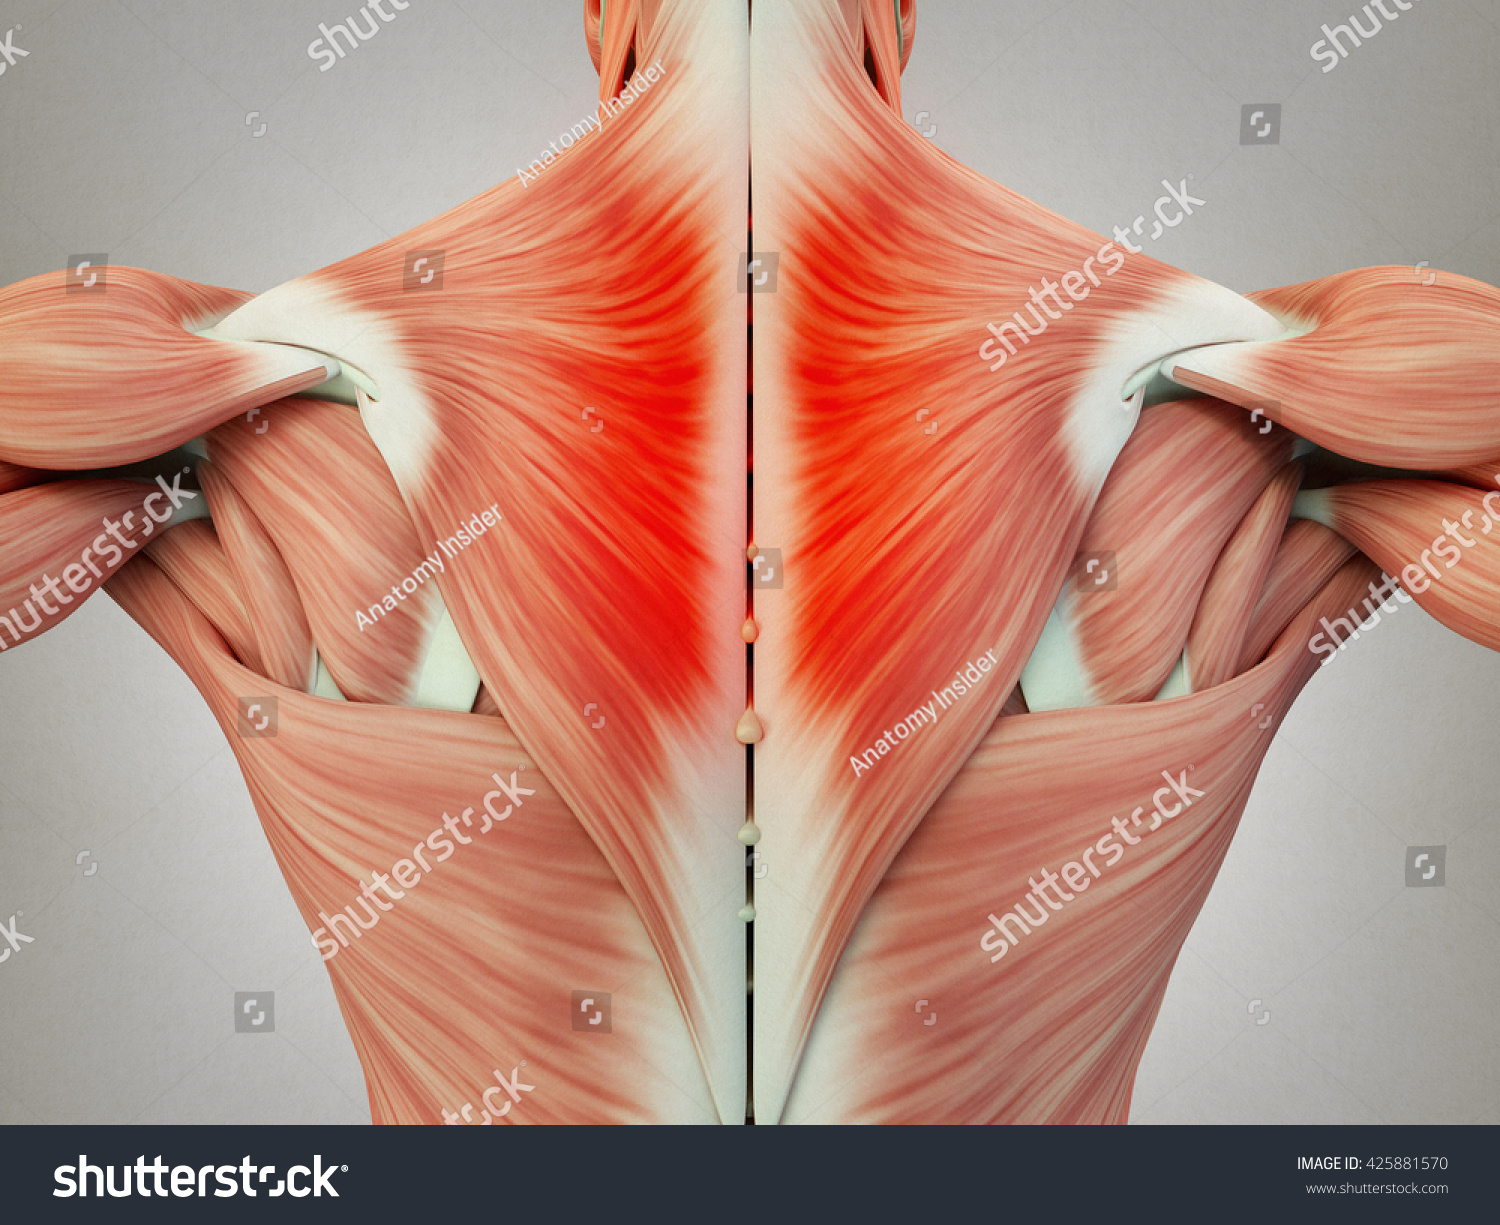 Human Anatomy Torso Back Muscles Pain Stock Illustration 425881570